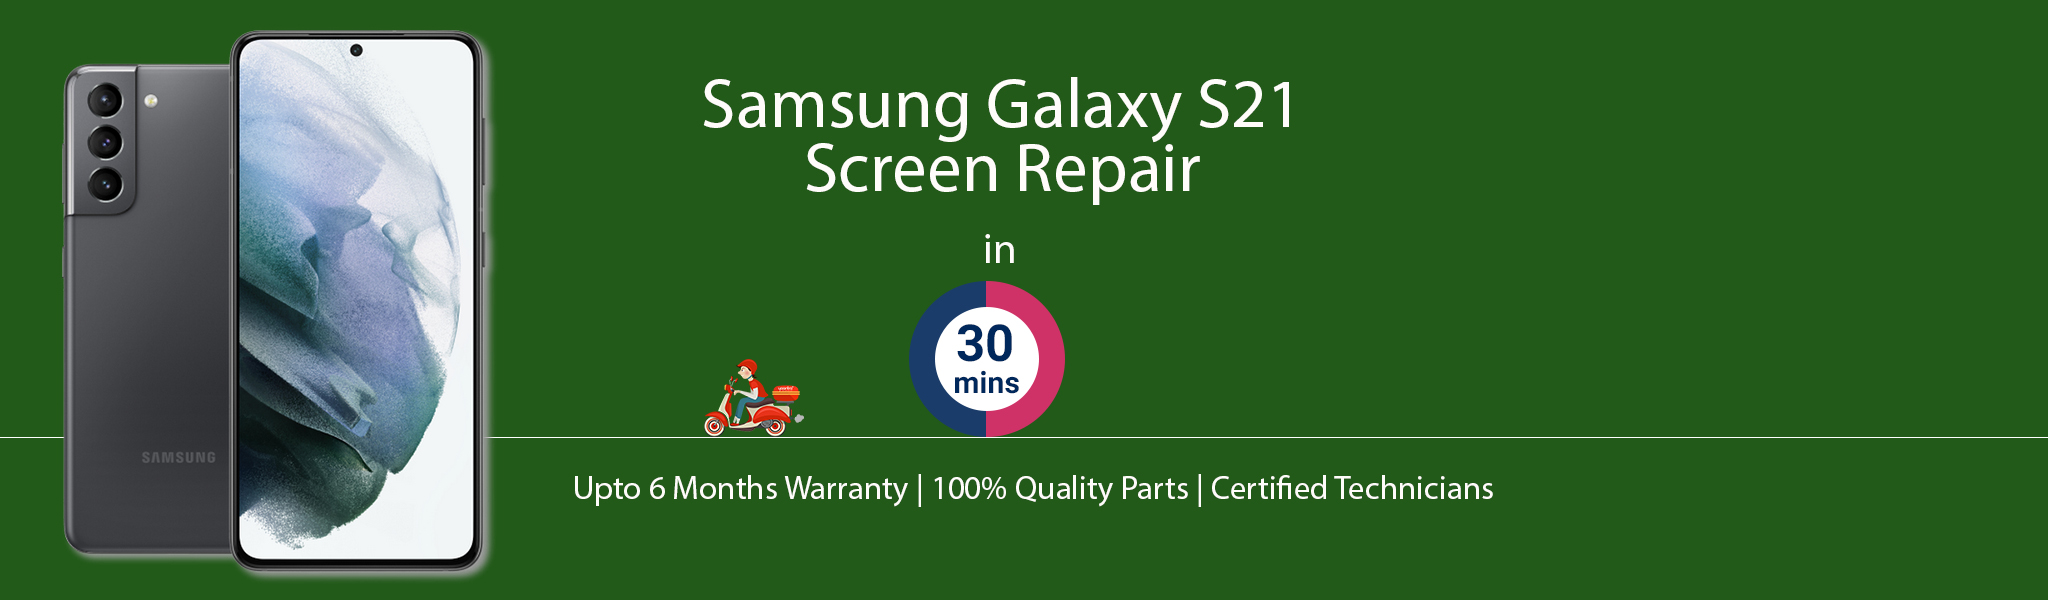 samsung-galaxy-s21-screen-repair.jpg